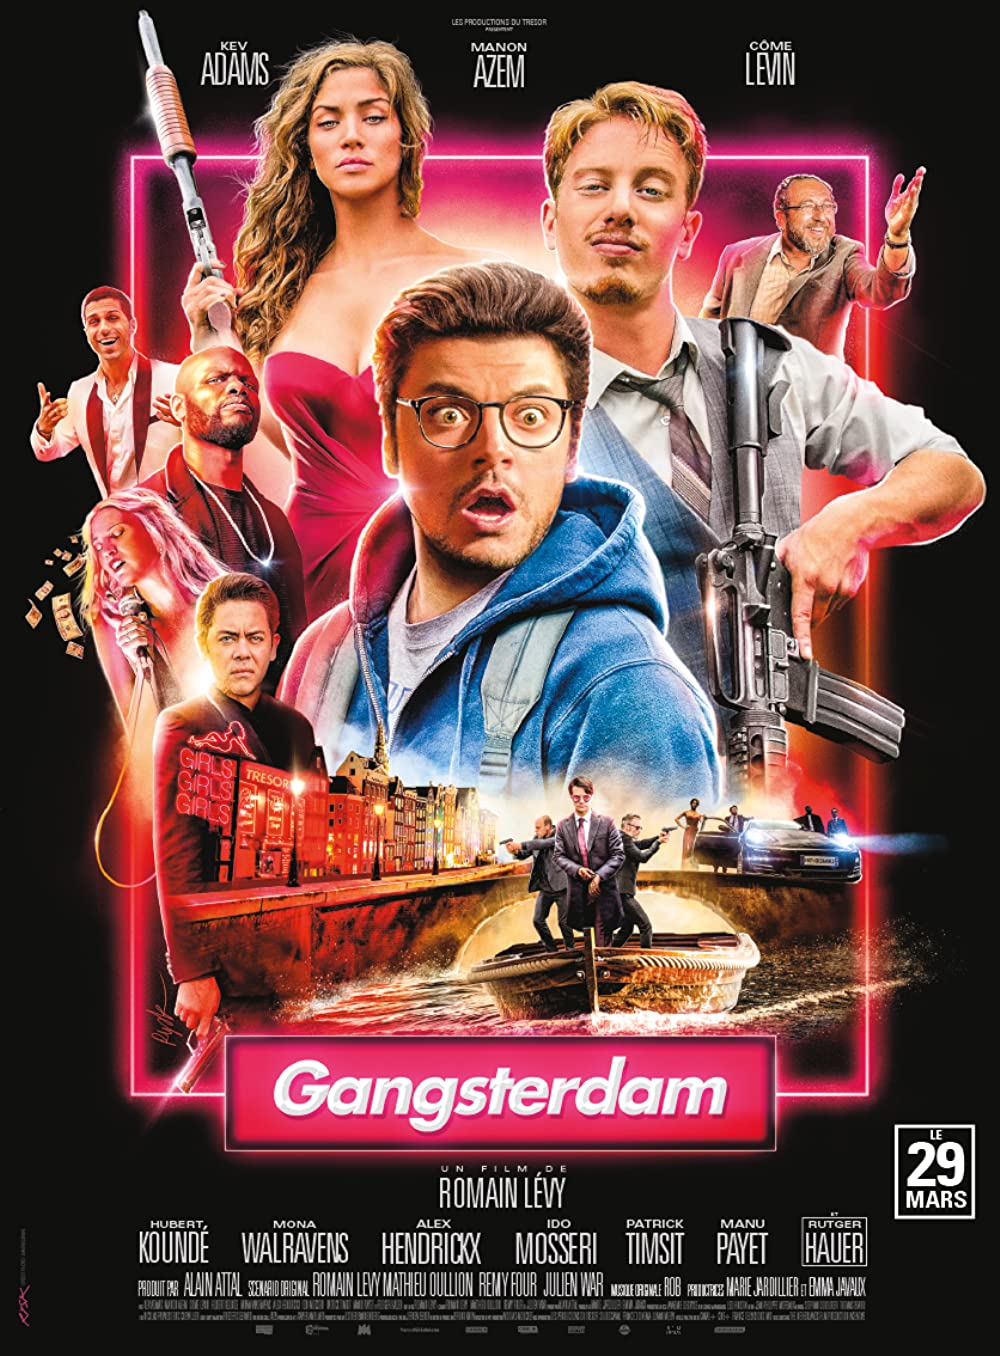 Filmbeschreibung zu Gangsterdam